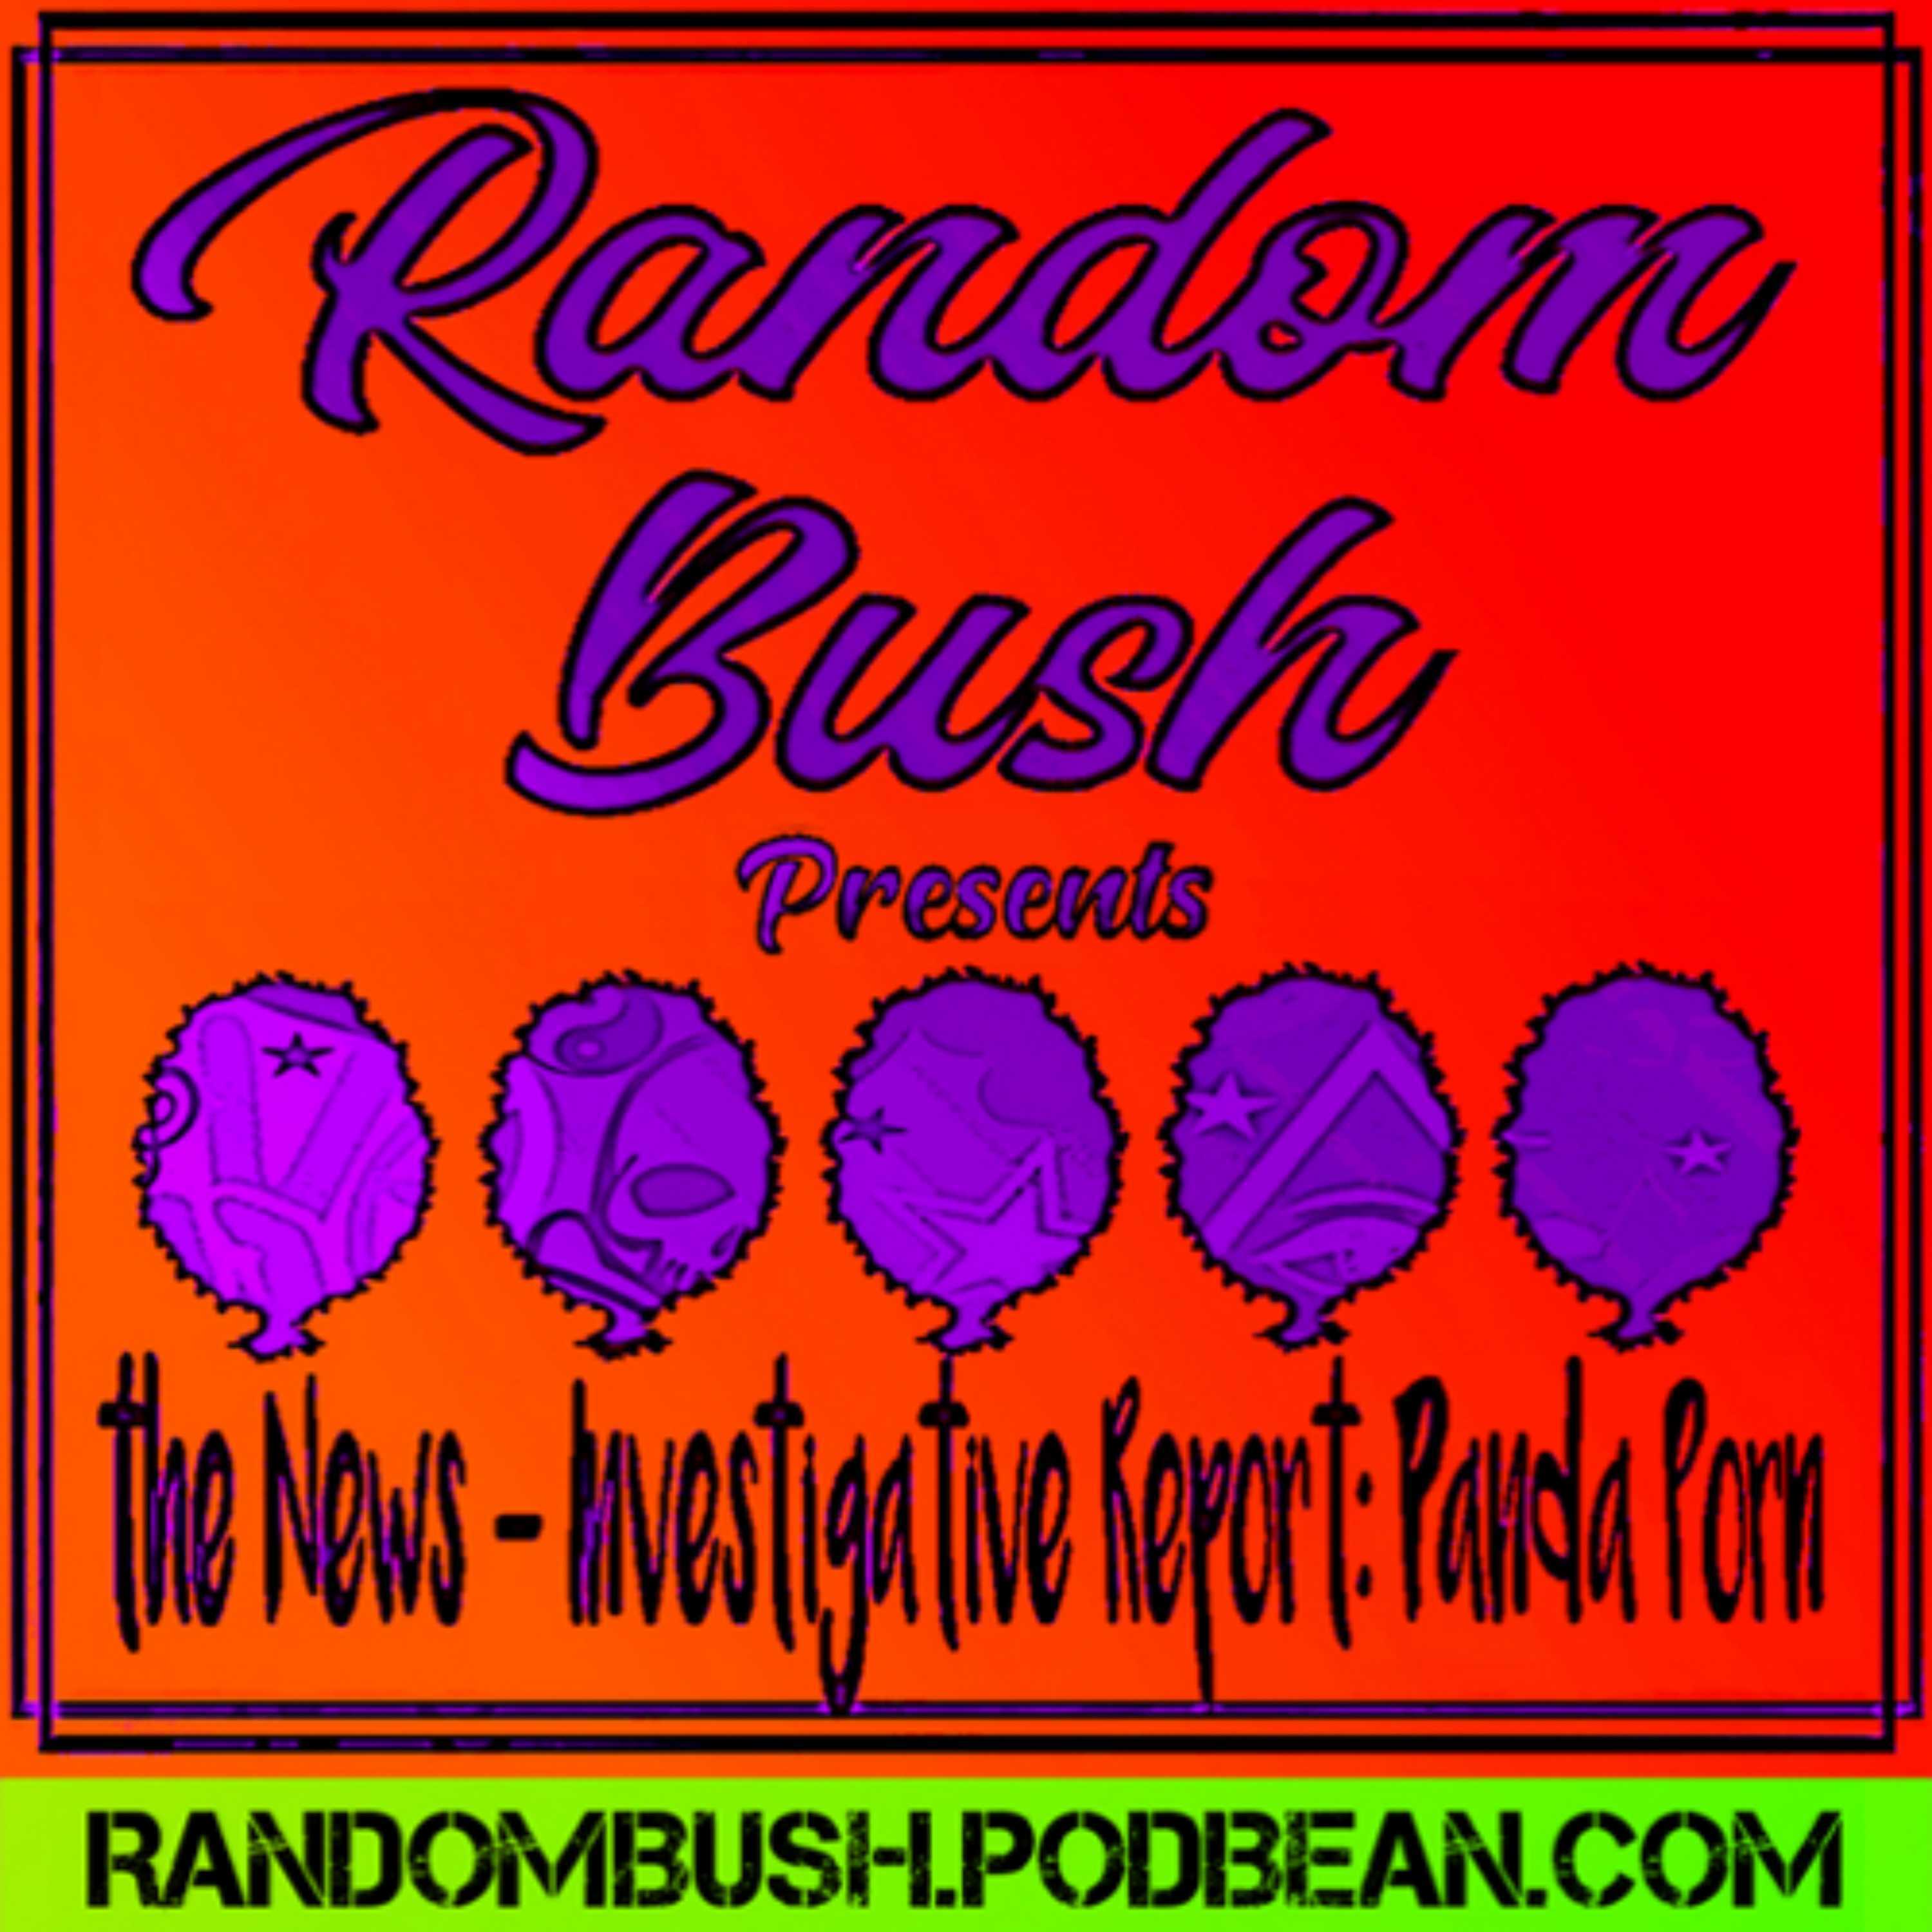 RandomBush Presents - the News: Investigative Report Panda Porn